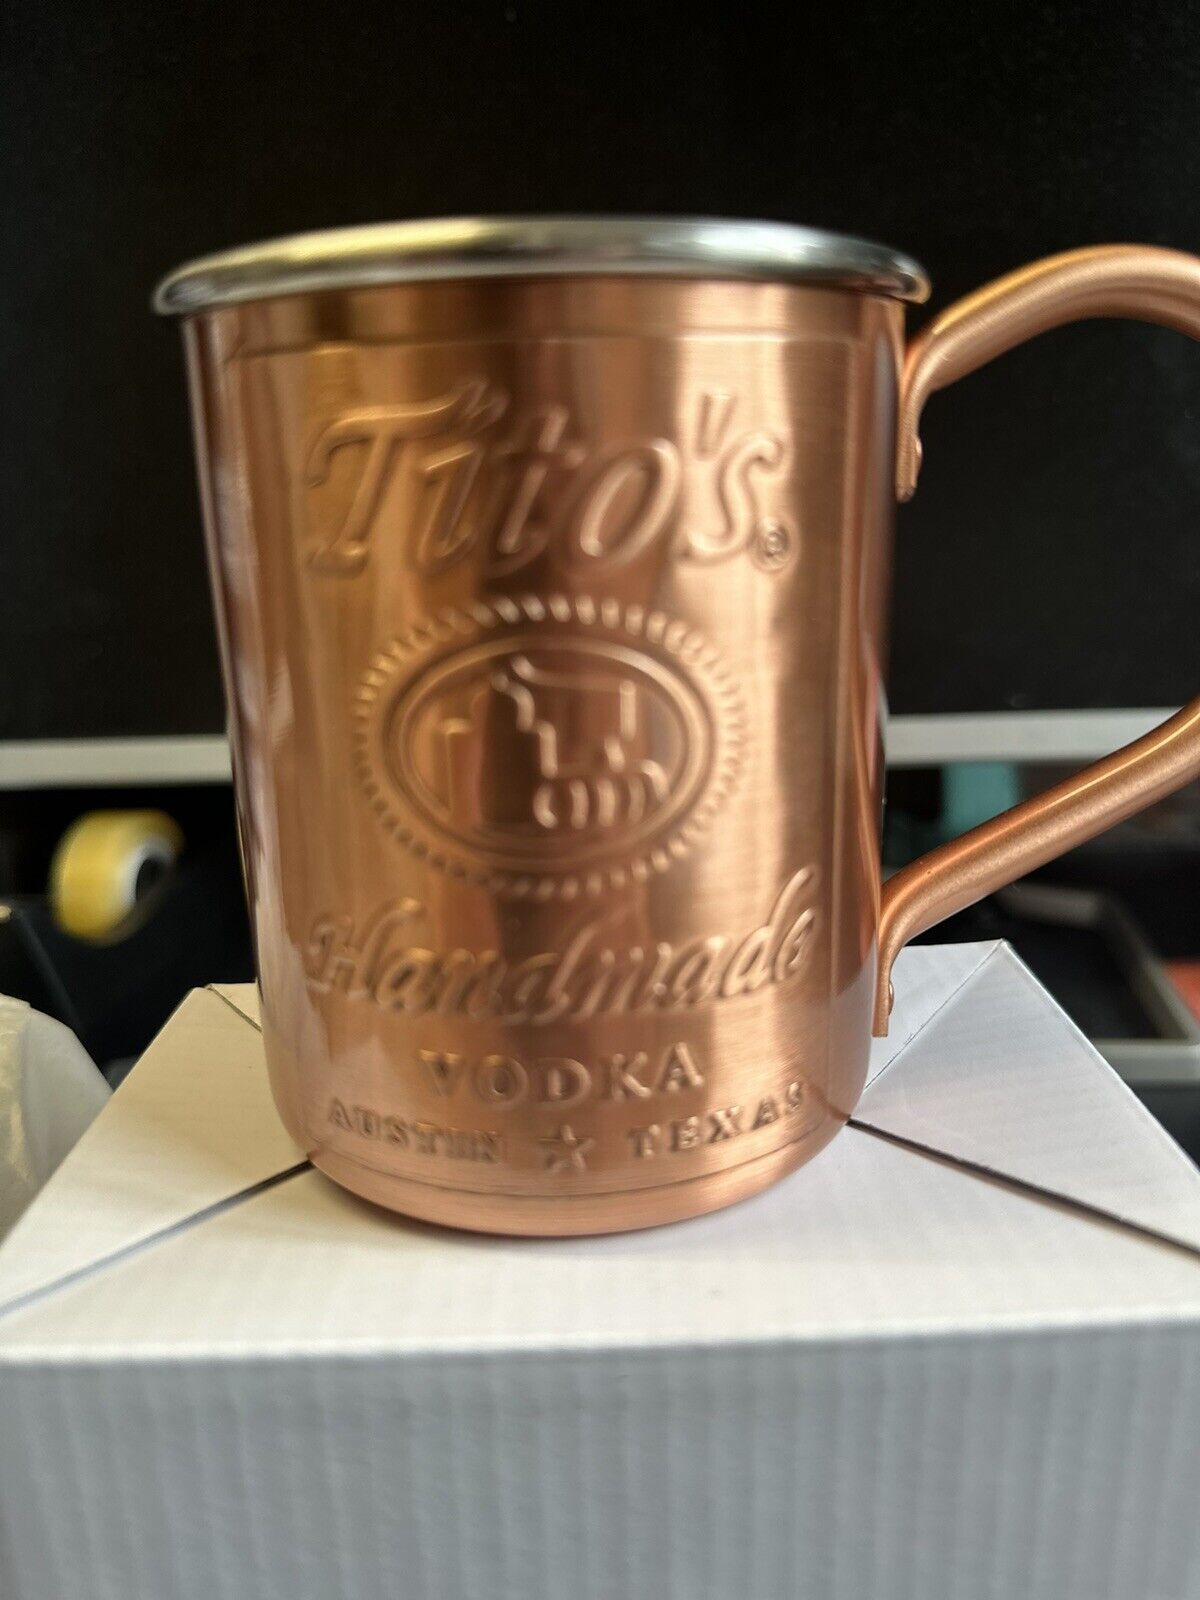 TITO'S Handmade Vodka Copper Moscow Mule Cups Mug  Yellowstone Barware 12oz